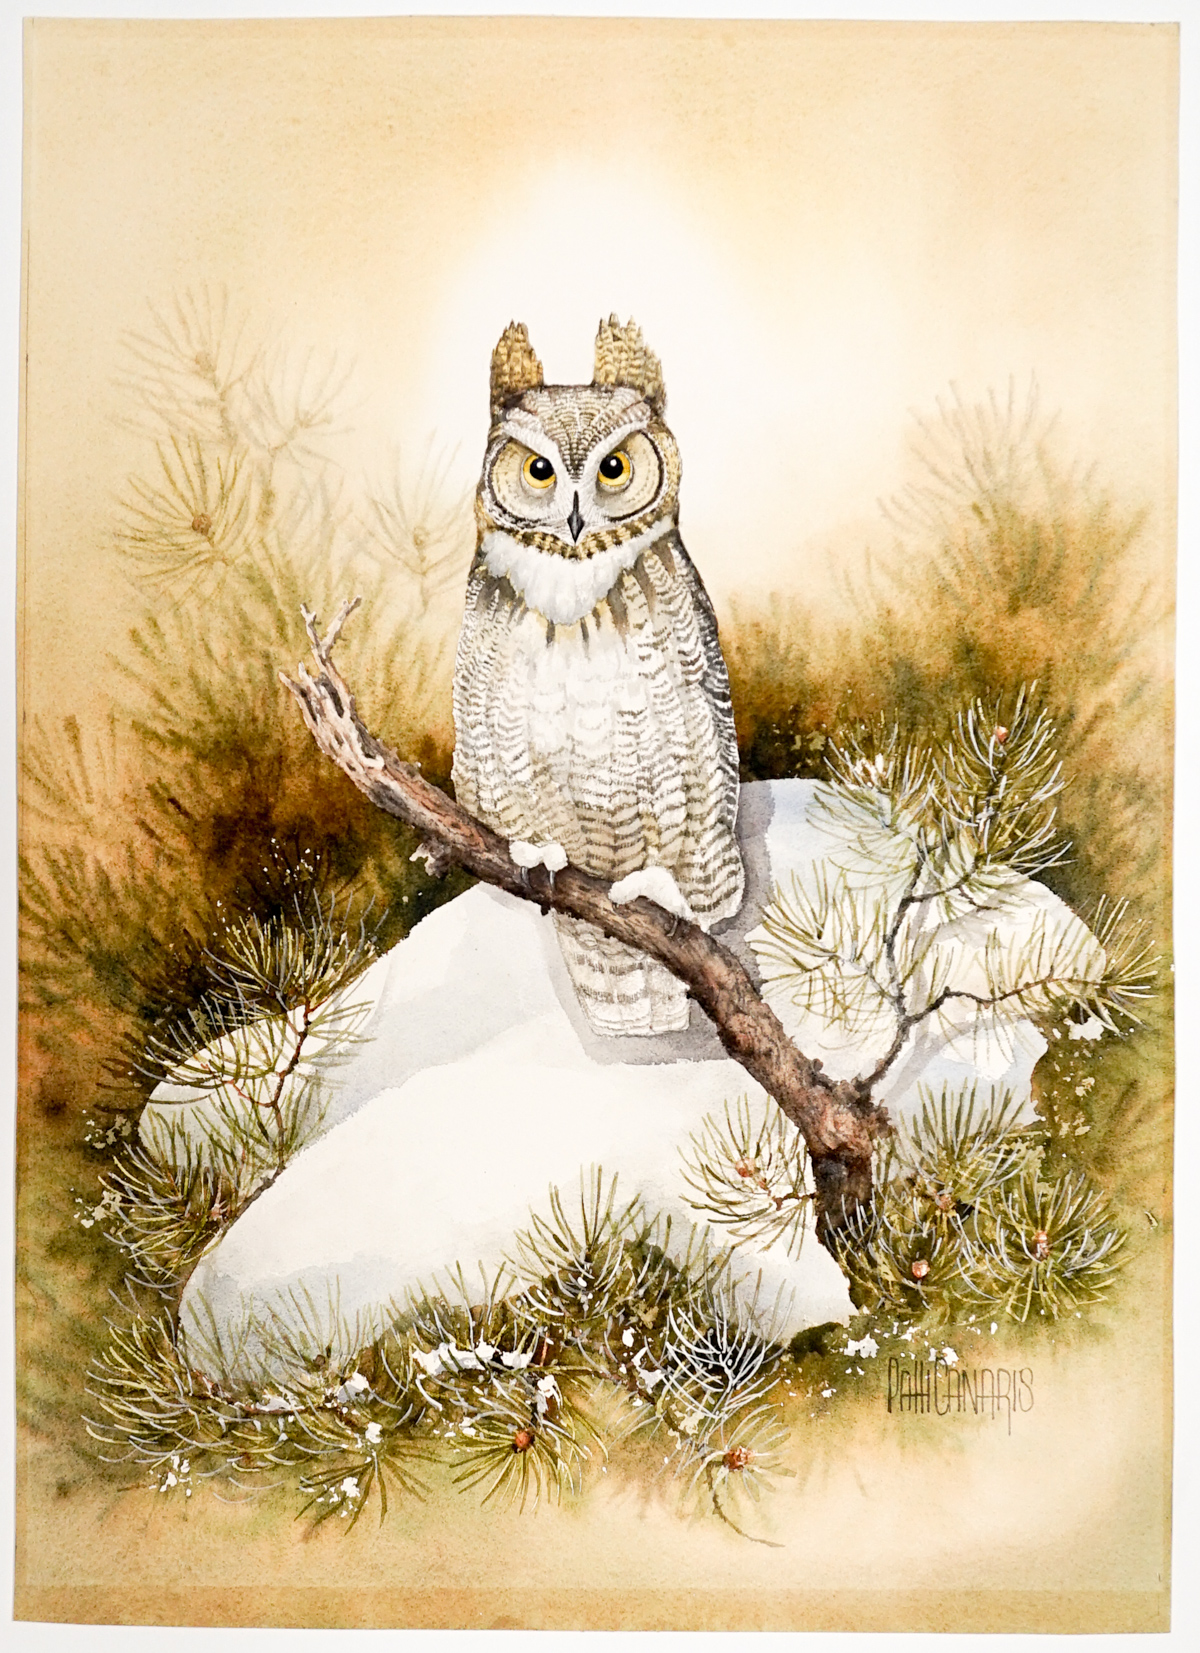 Patti Canaris Watercolor [Owl]